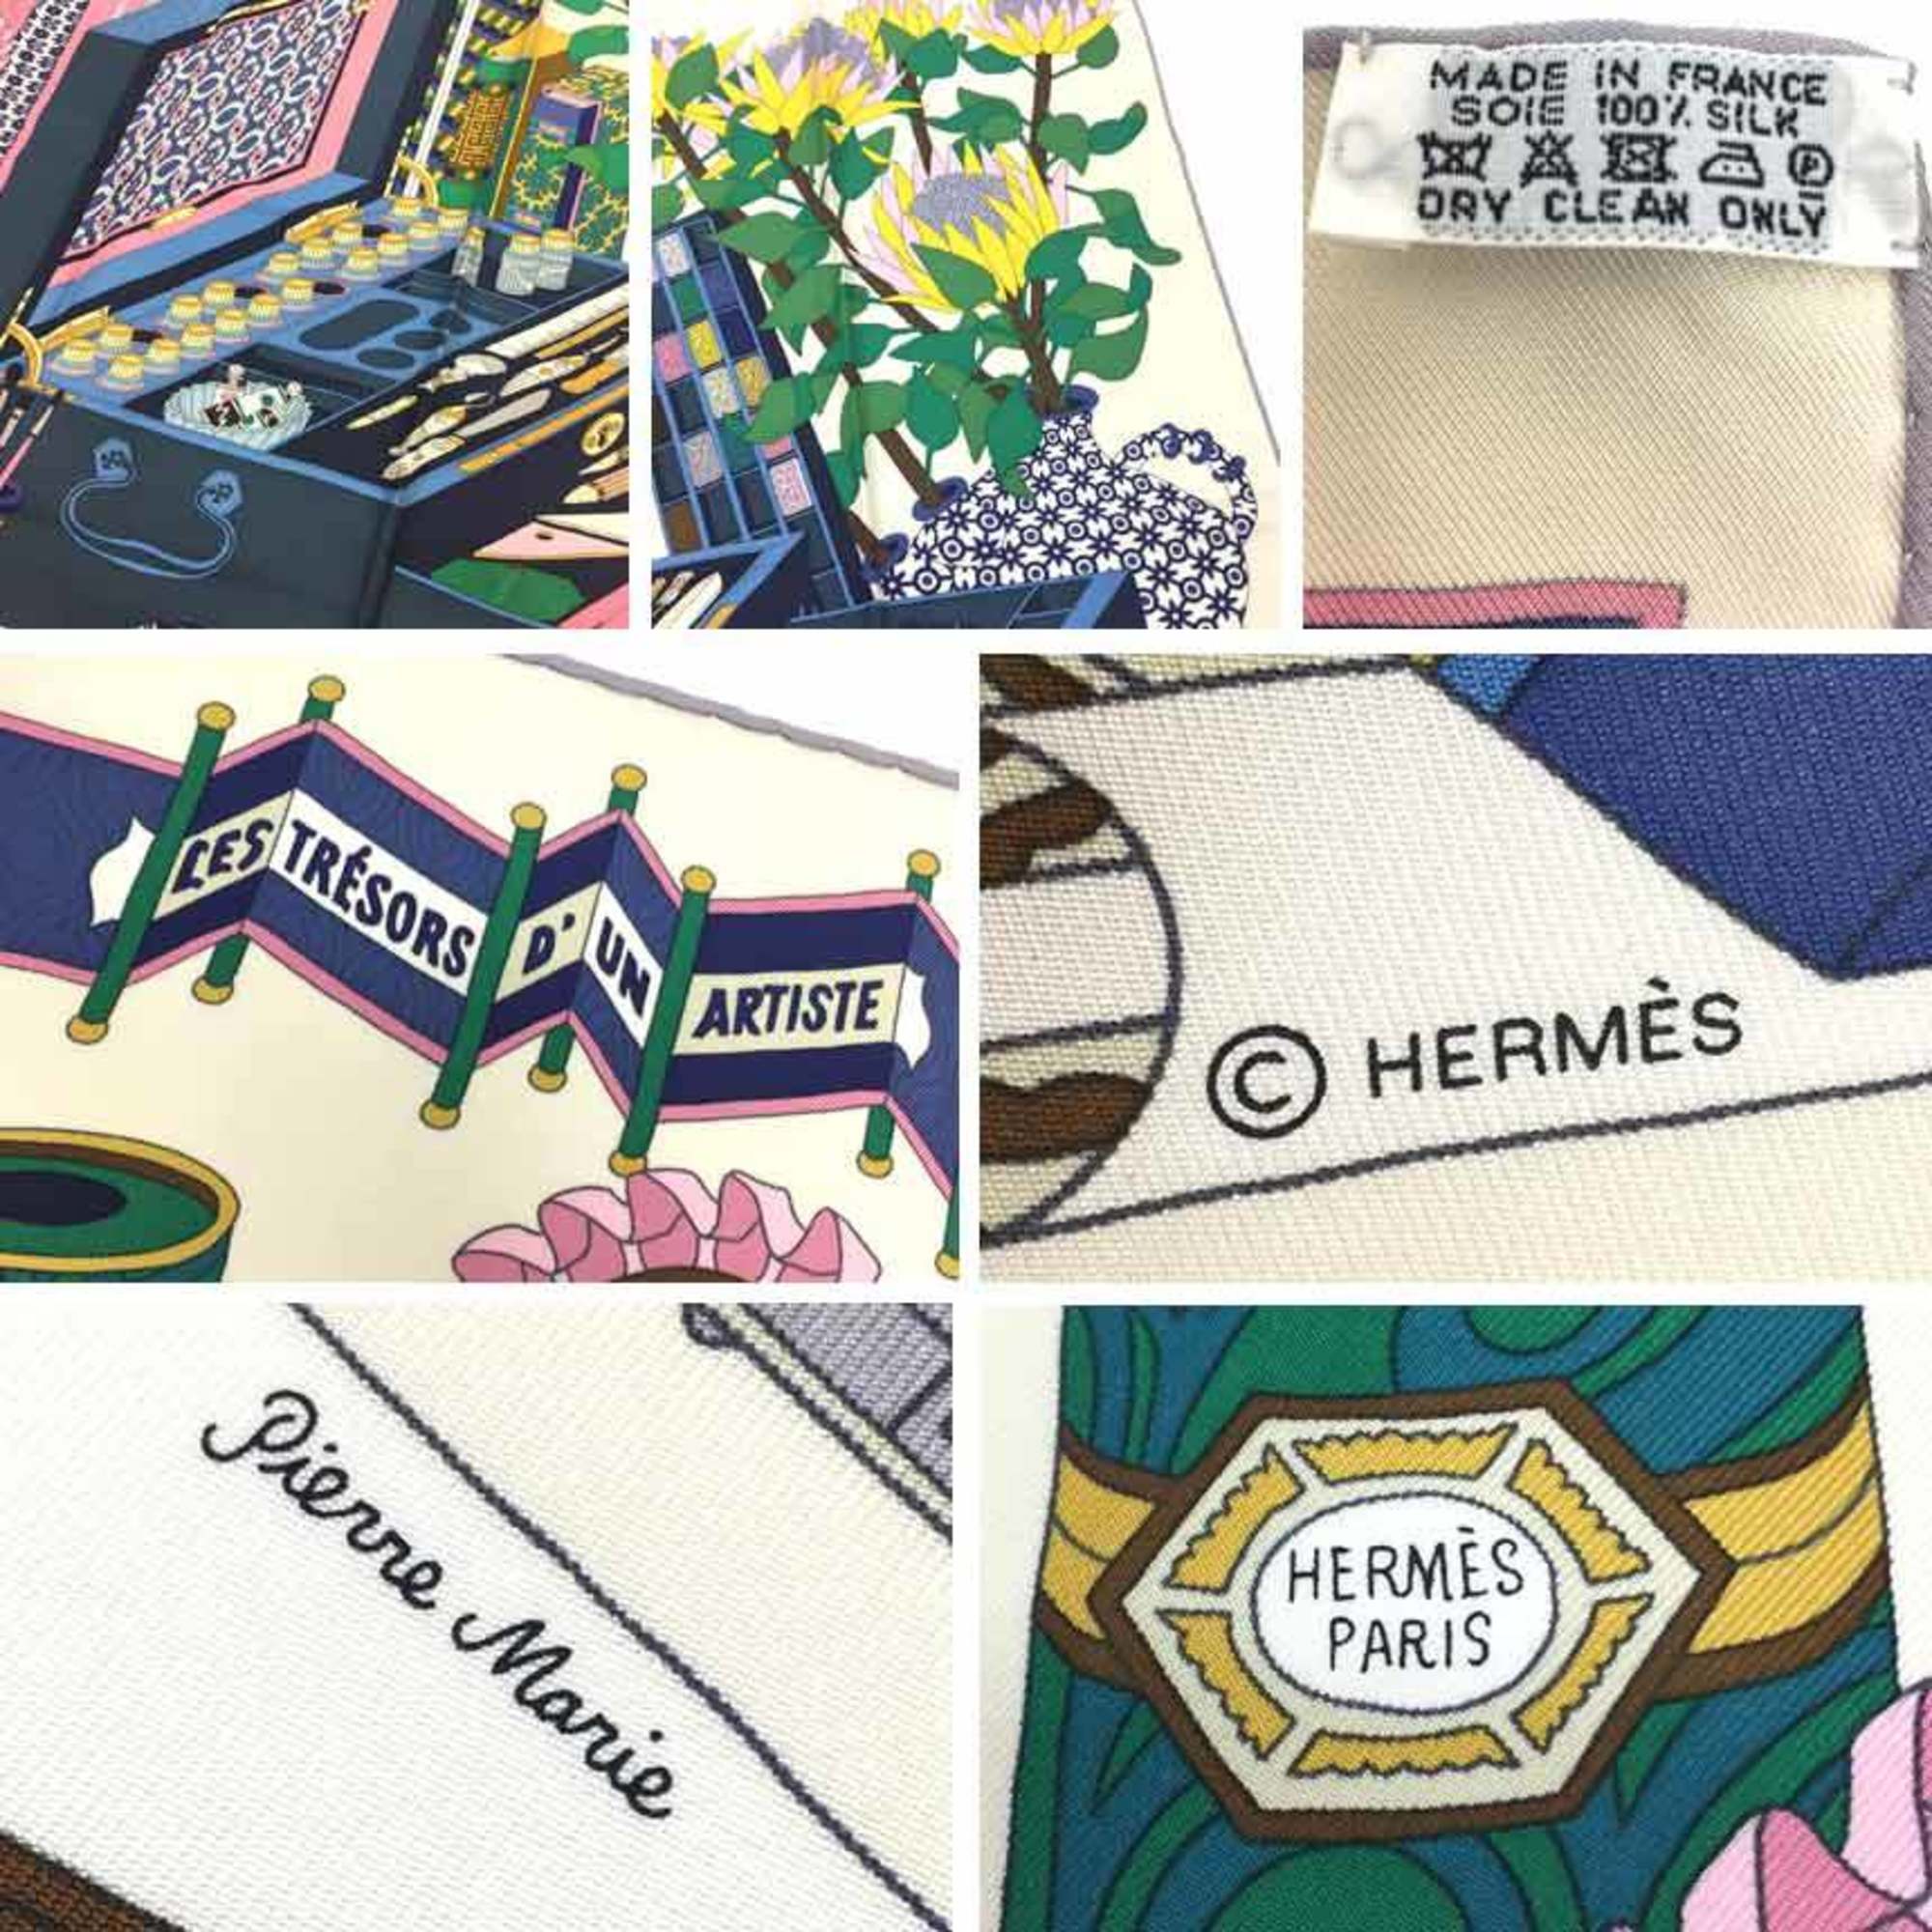 HERMES Hermes Carré 90 Scarf Muffler LES TRESORS D'UN ARTISTE A Painter's Treasure White Silk